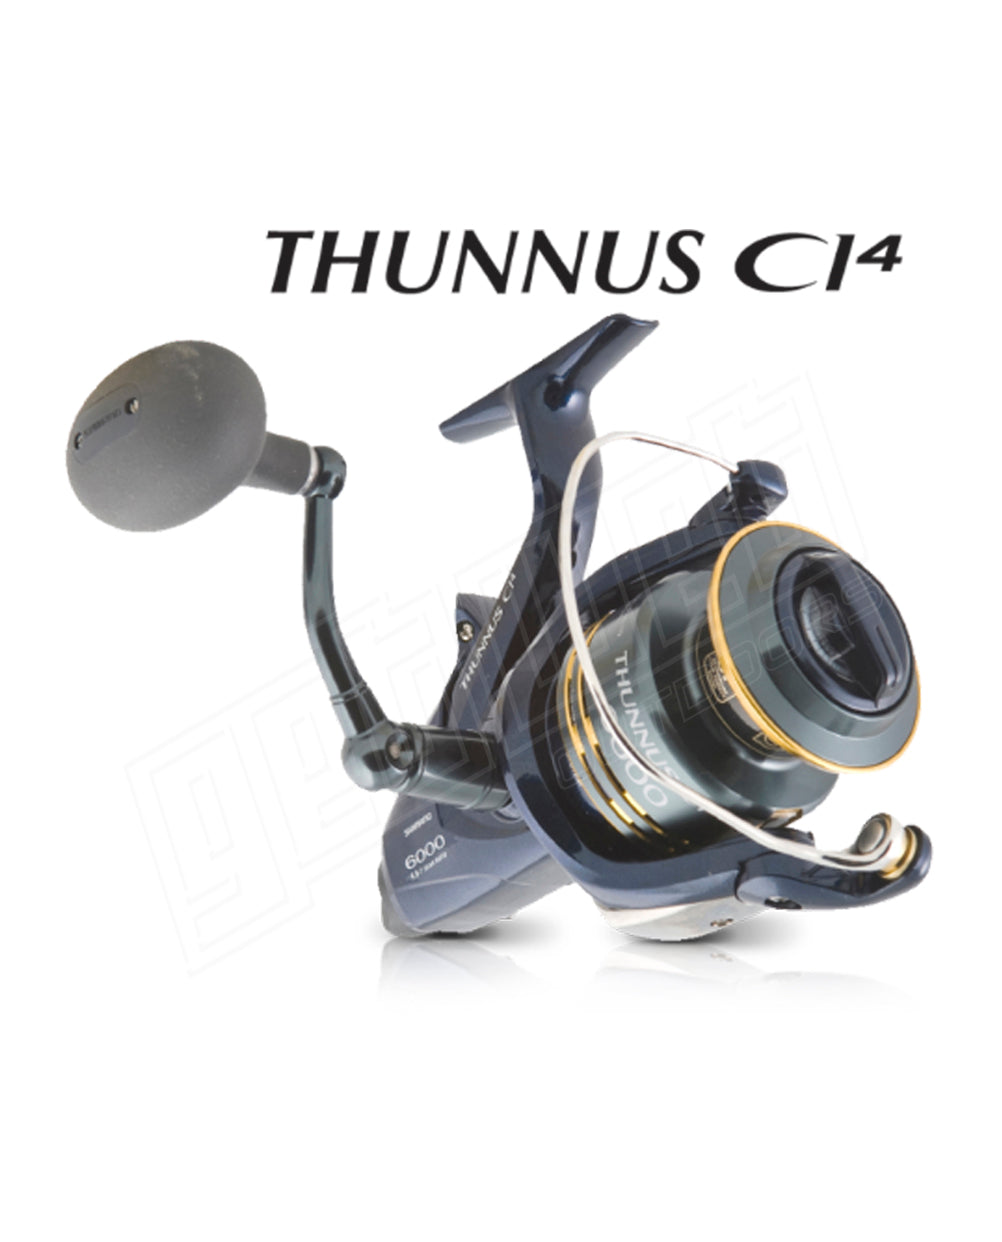 Shimano Thunnus Ci4 12000 Baitrunner Fishing Reel - 7 Bearings